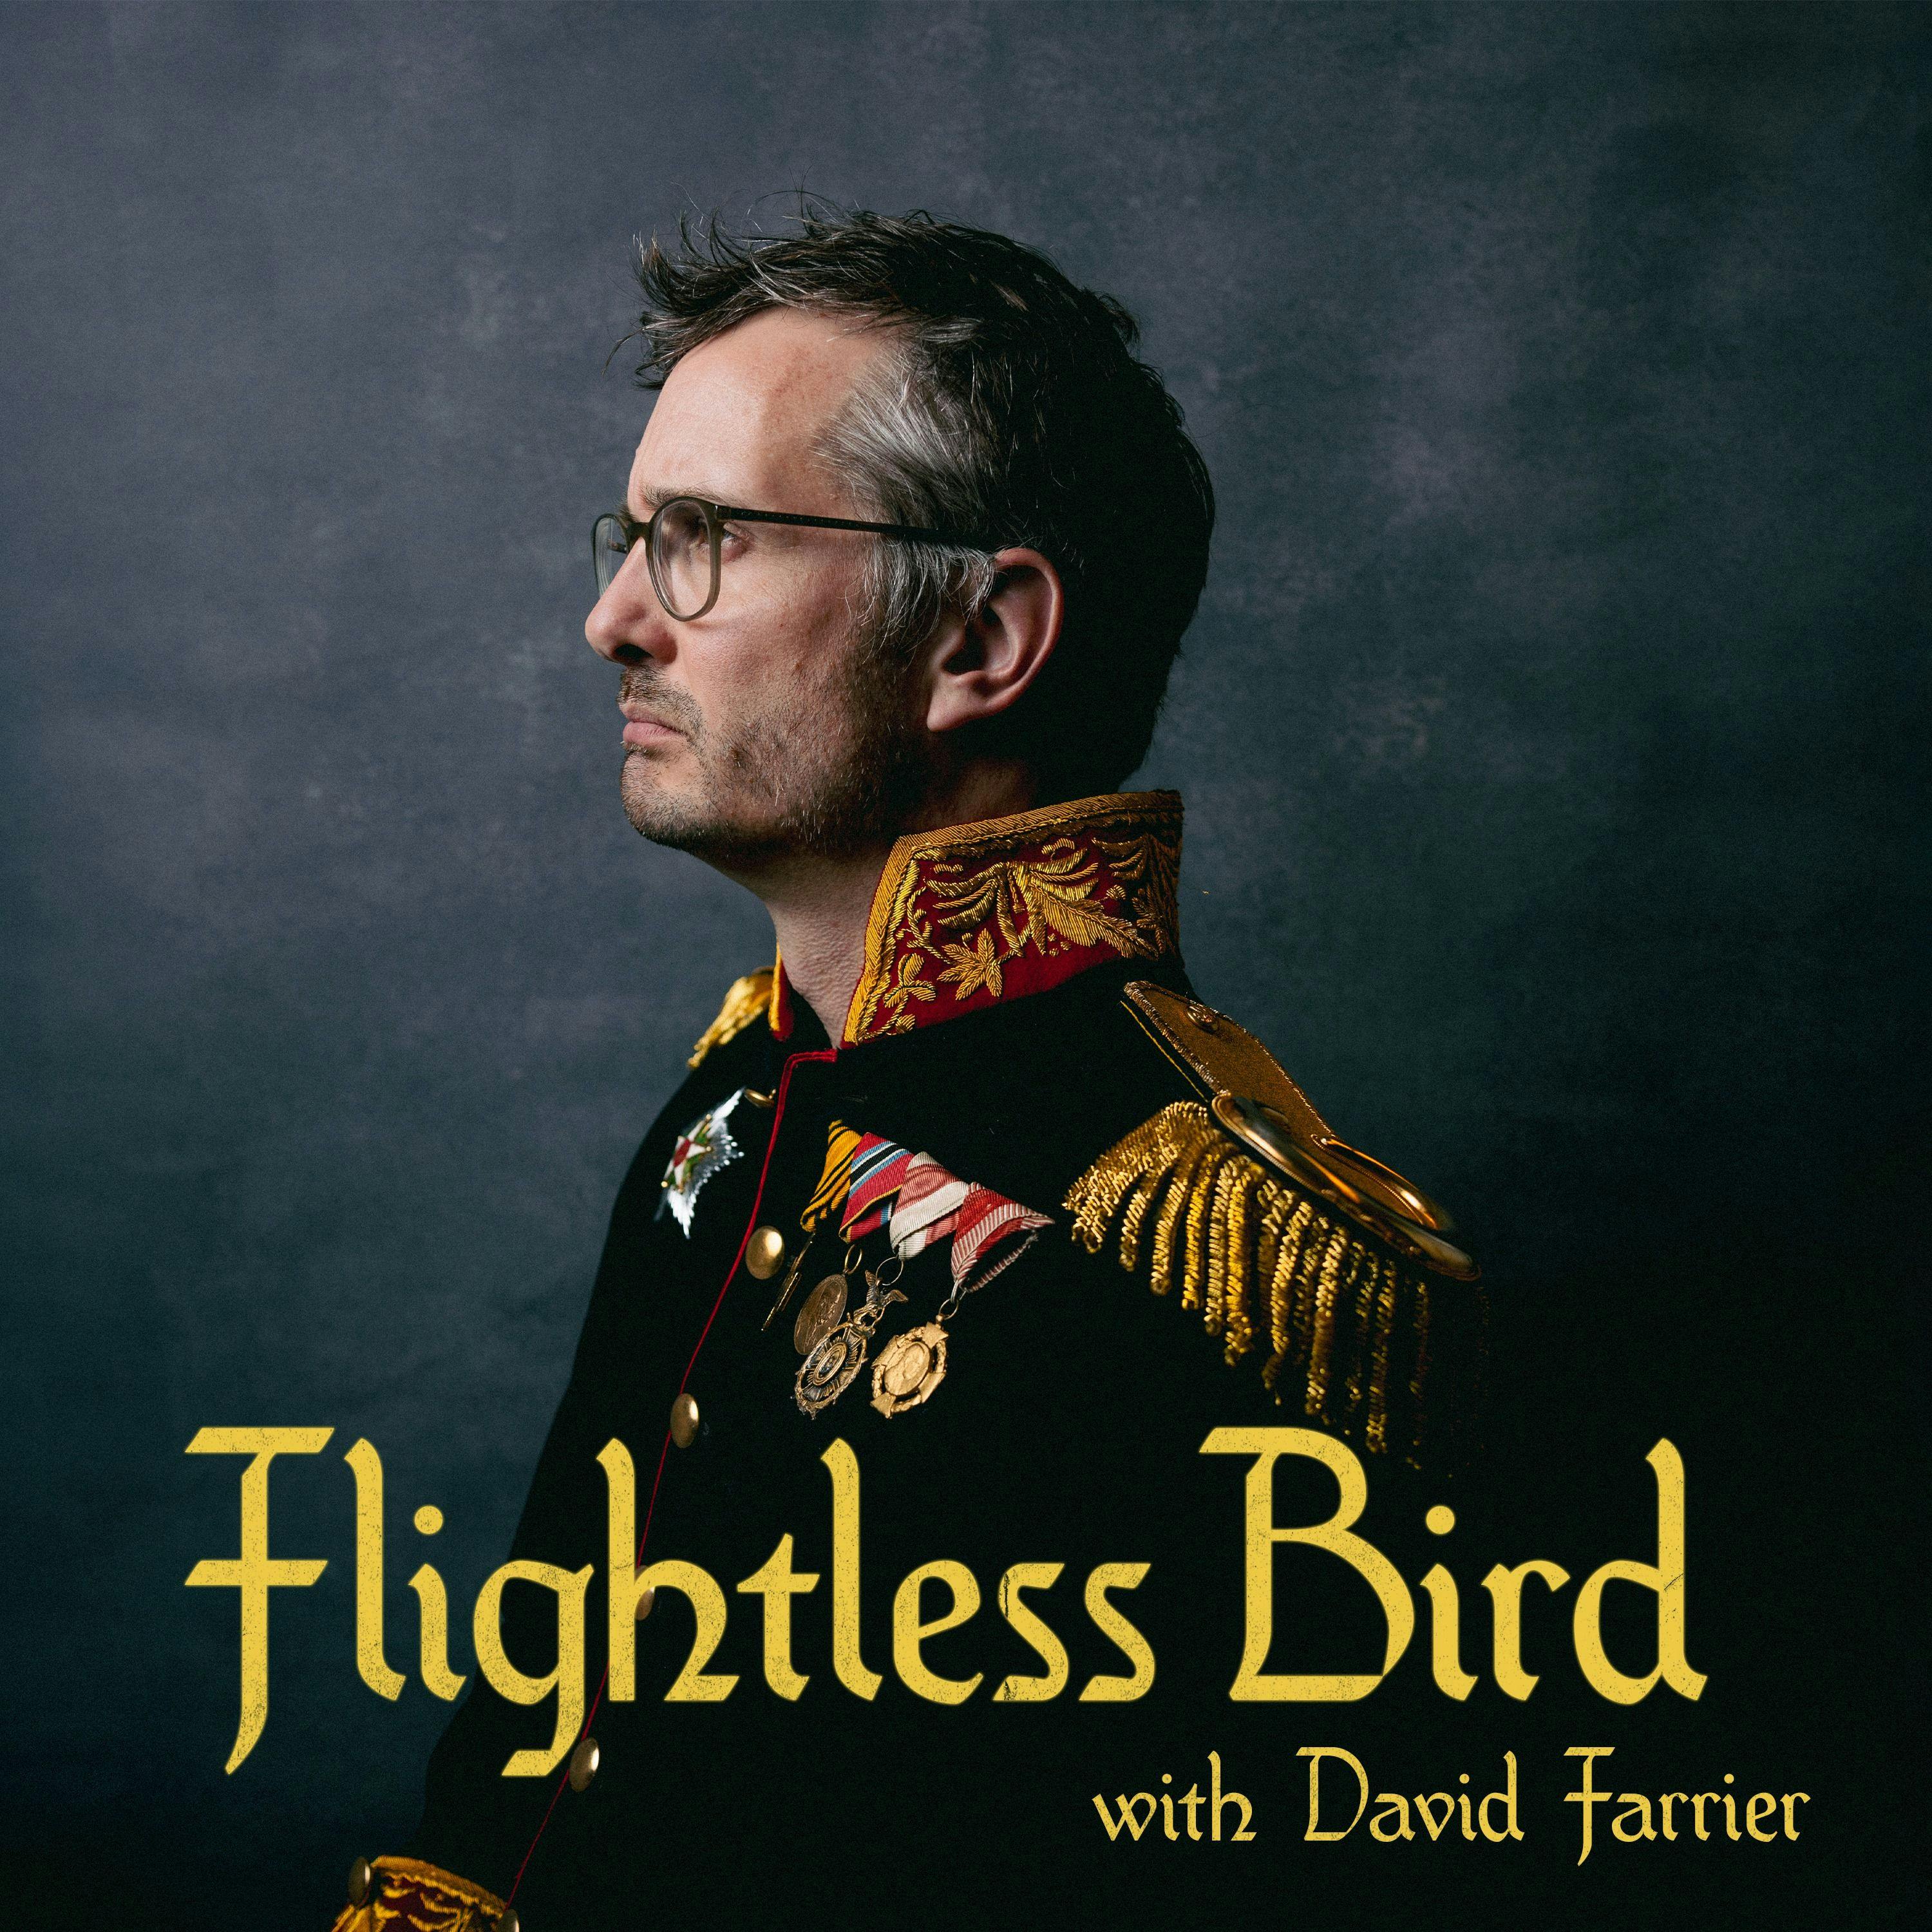 Flightless Bird: Independence Day